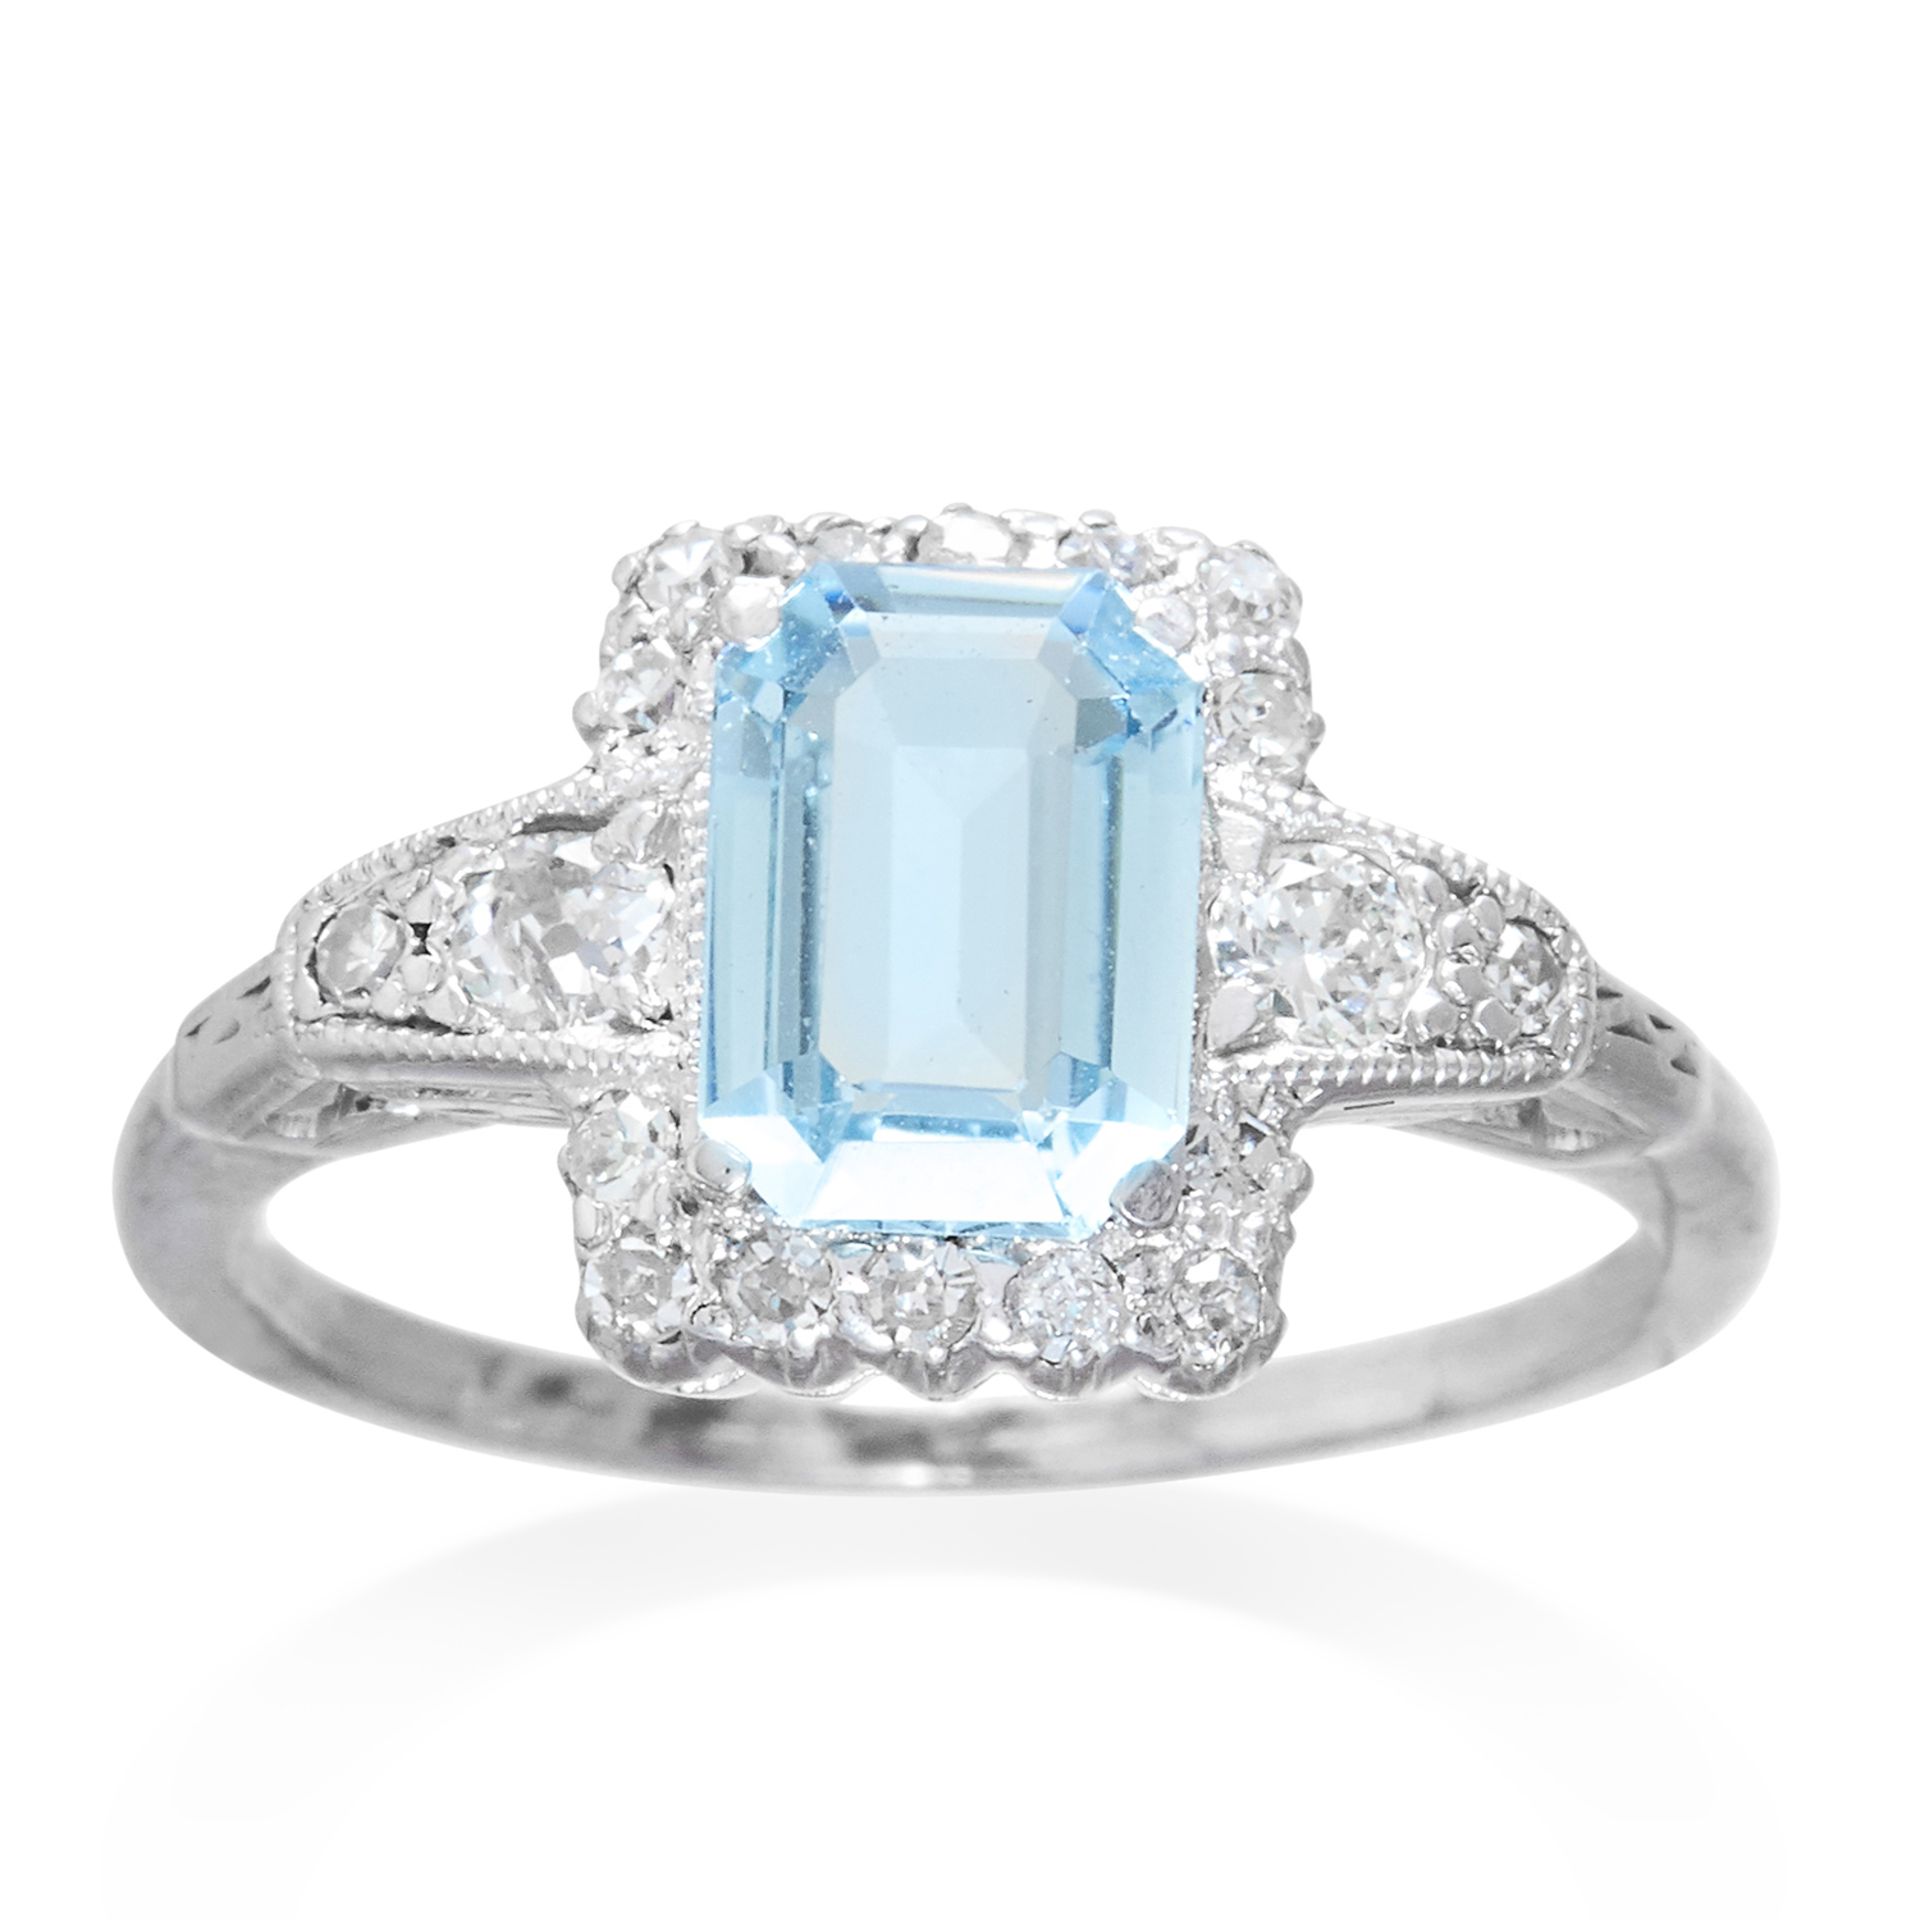 AN ART DECO AQUAMARINE AND DIAMOND RING in platinum or white gold, the step cut aquamarine of